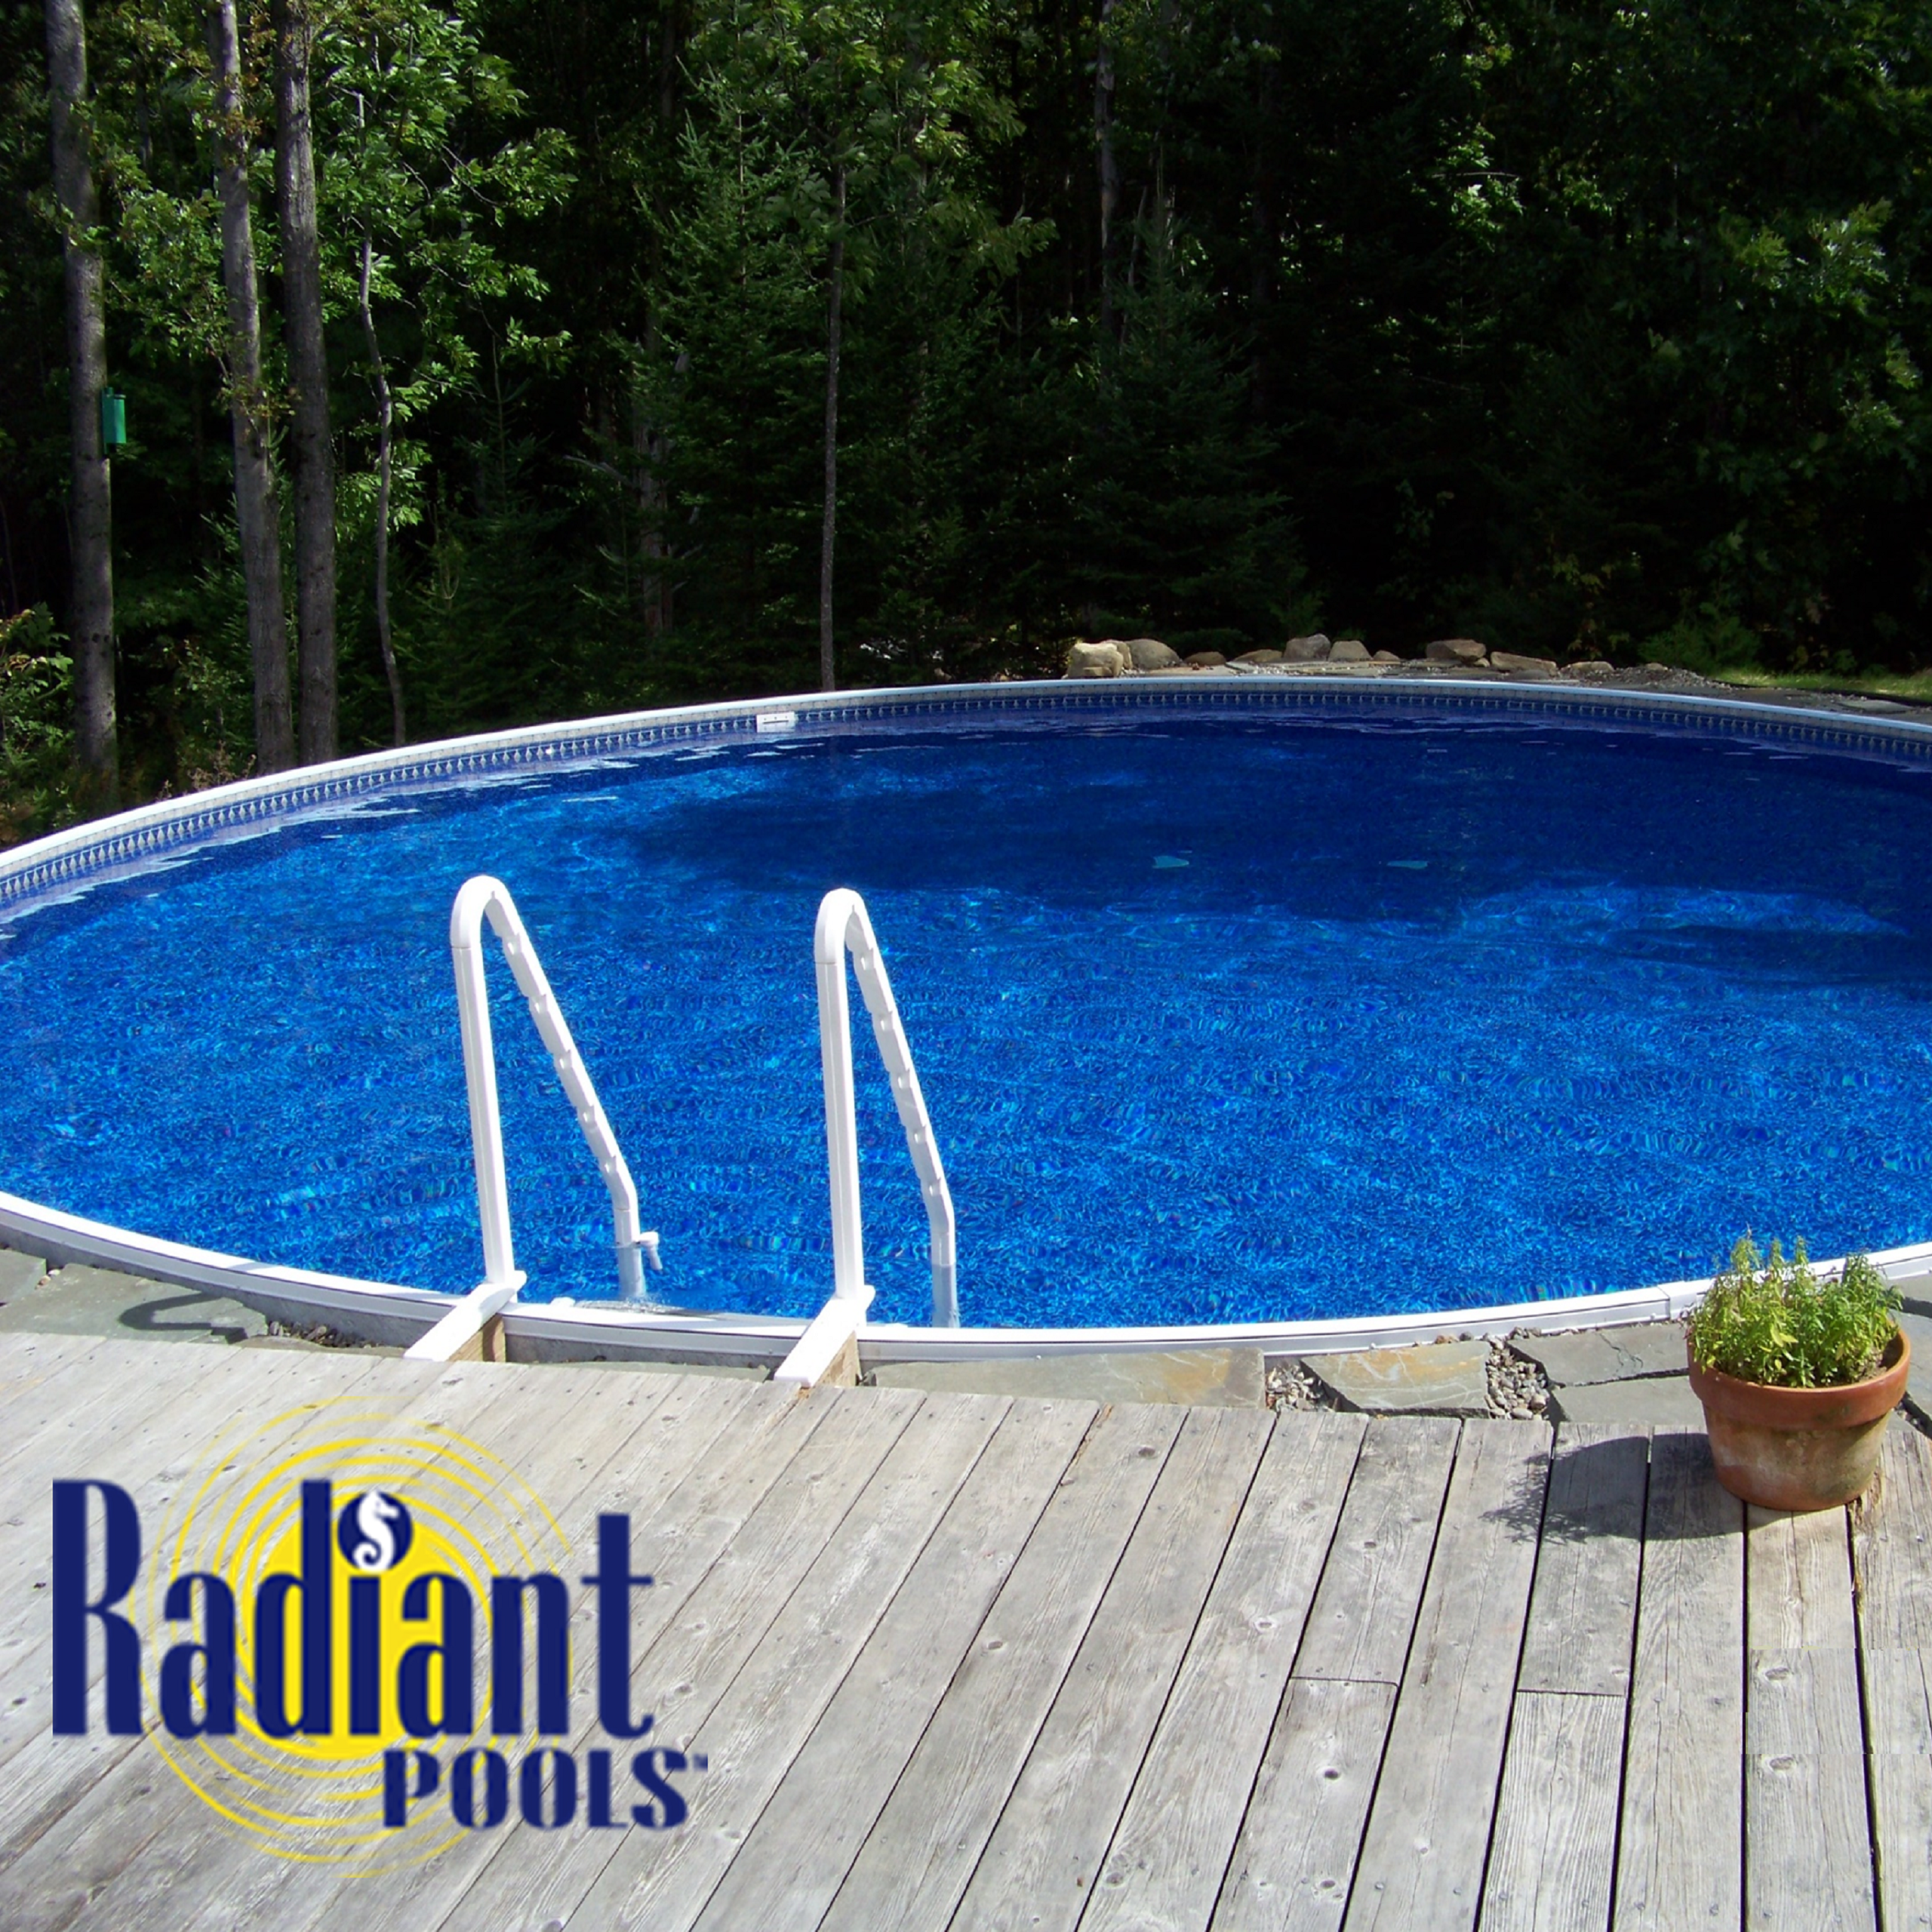 Radiant Pools logo